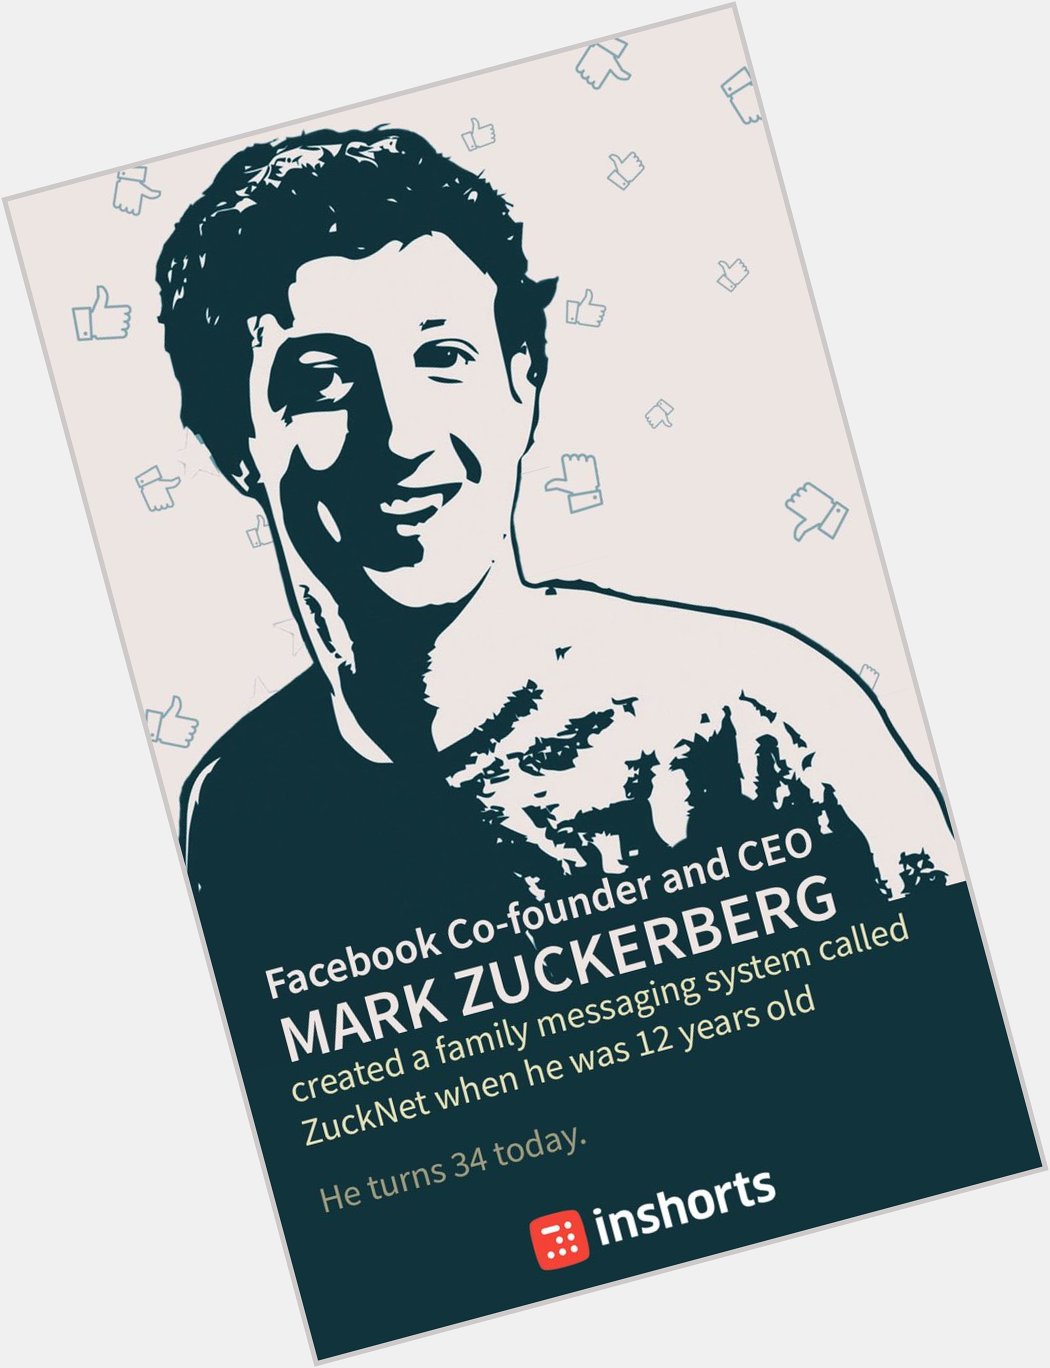 Happy Birthday Mark Zuckerberg! !! 